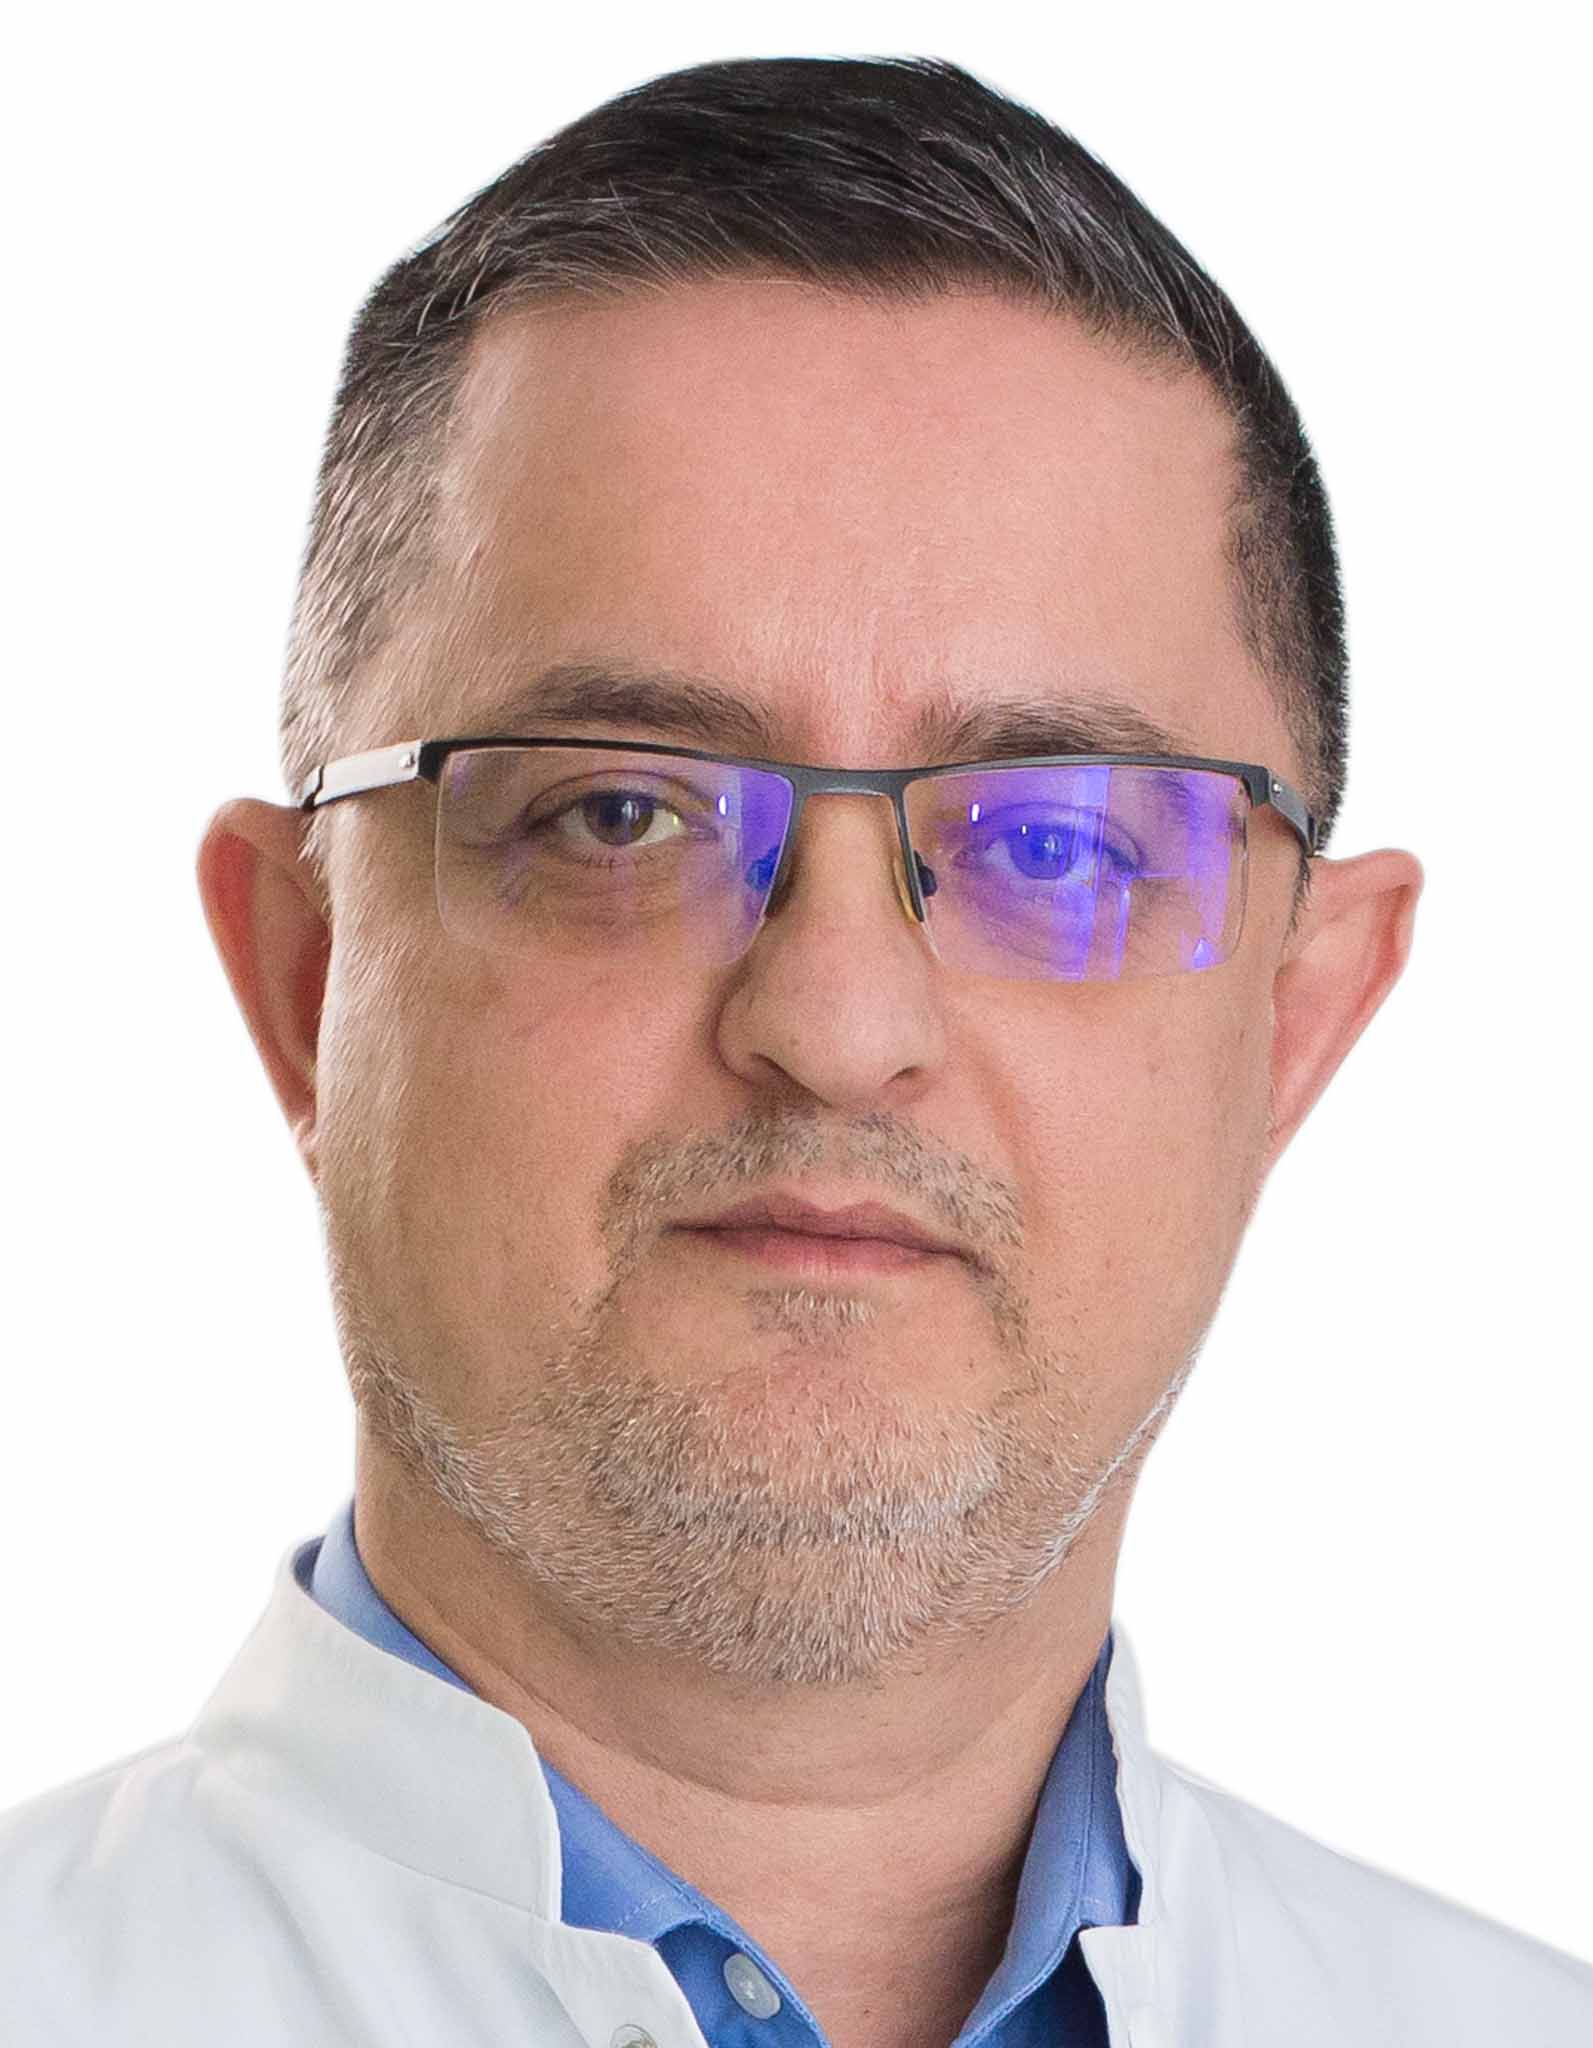 Dr. Cristian Nicolae